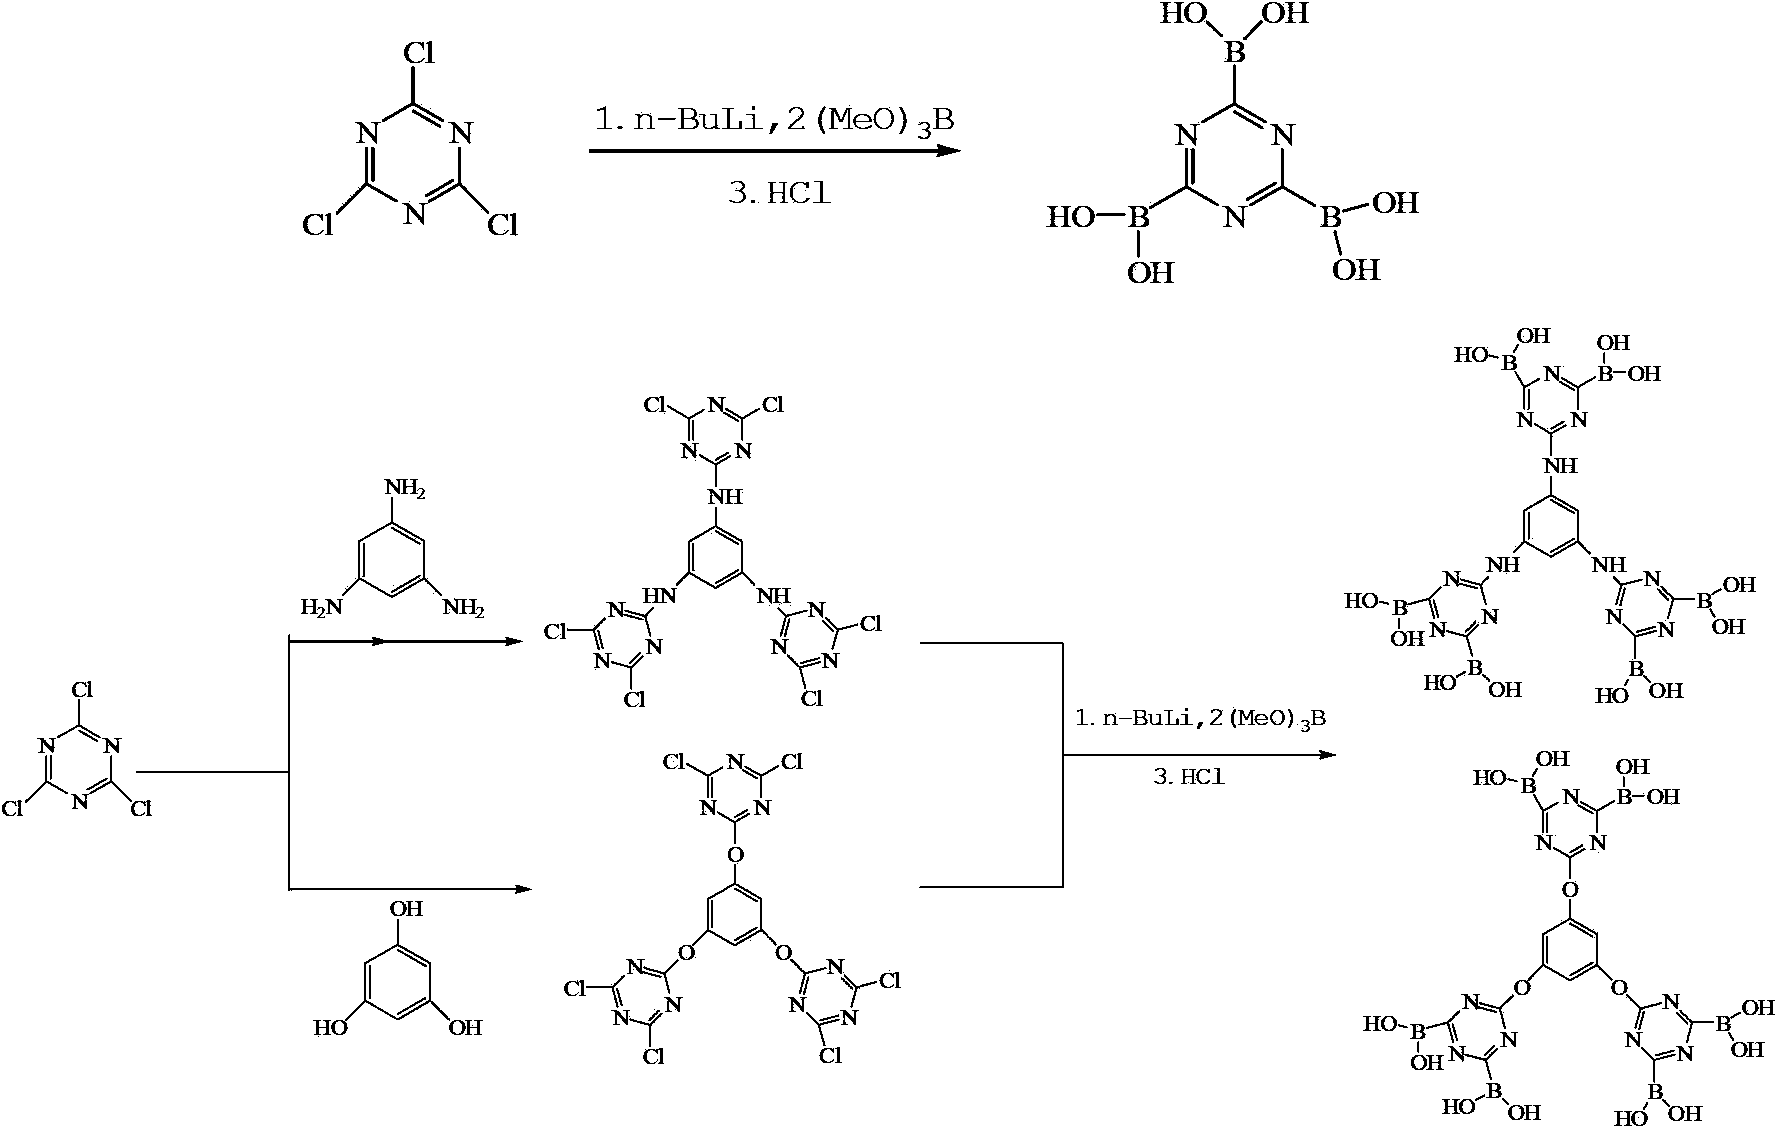 Triazine boric acid derivatives and preparation methods thereof